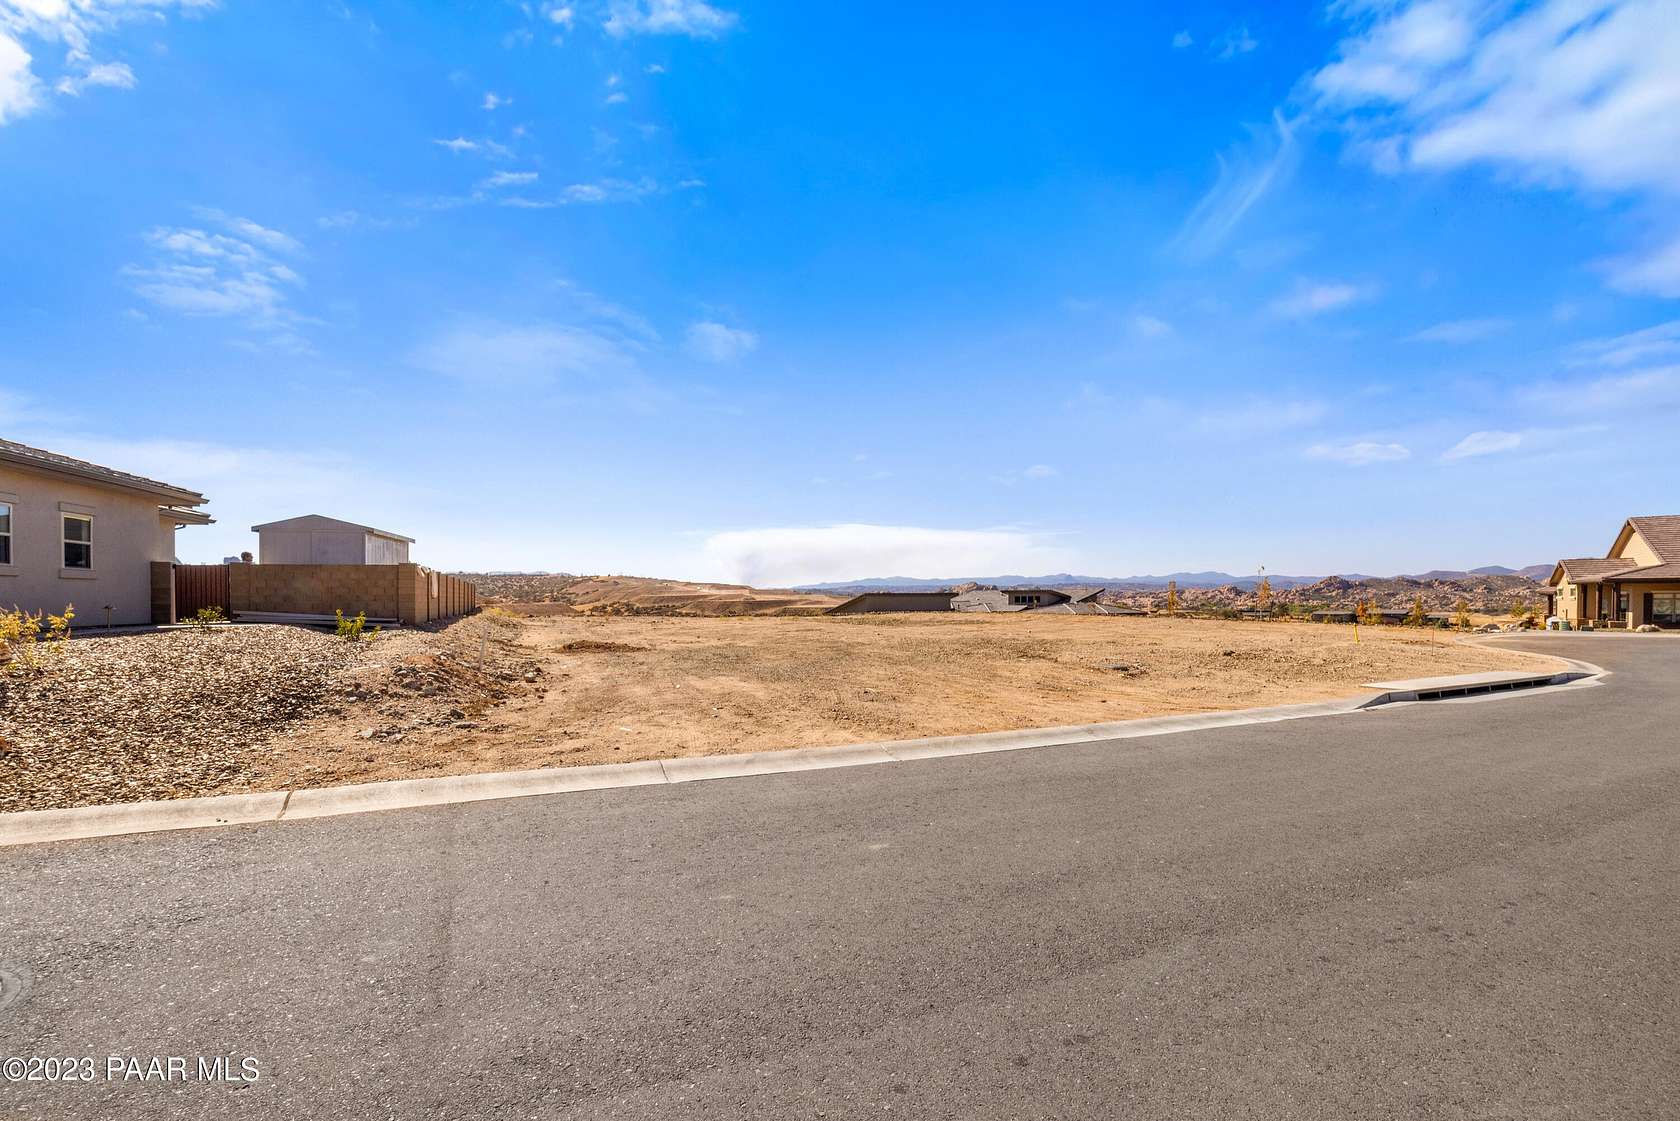 0.29 Acres of Residential Land for Sale in Prescott, Arizona